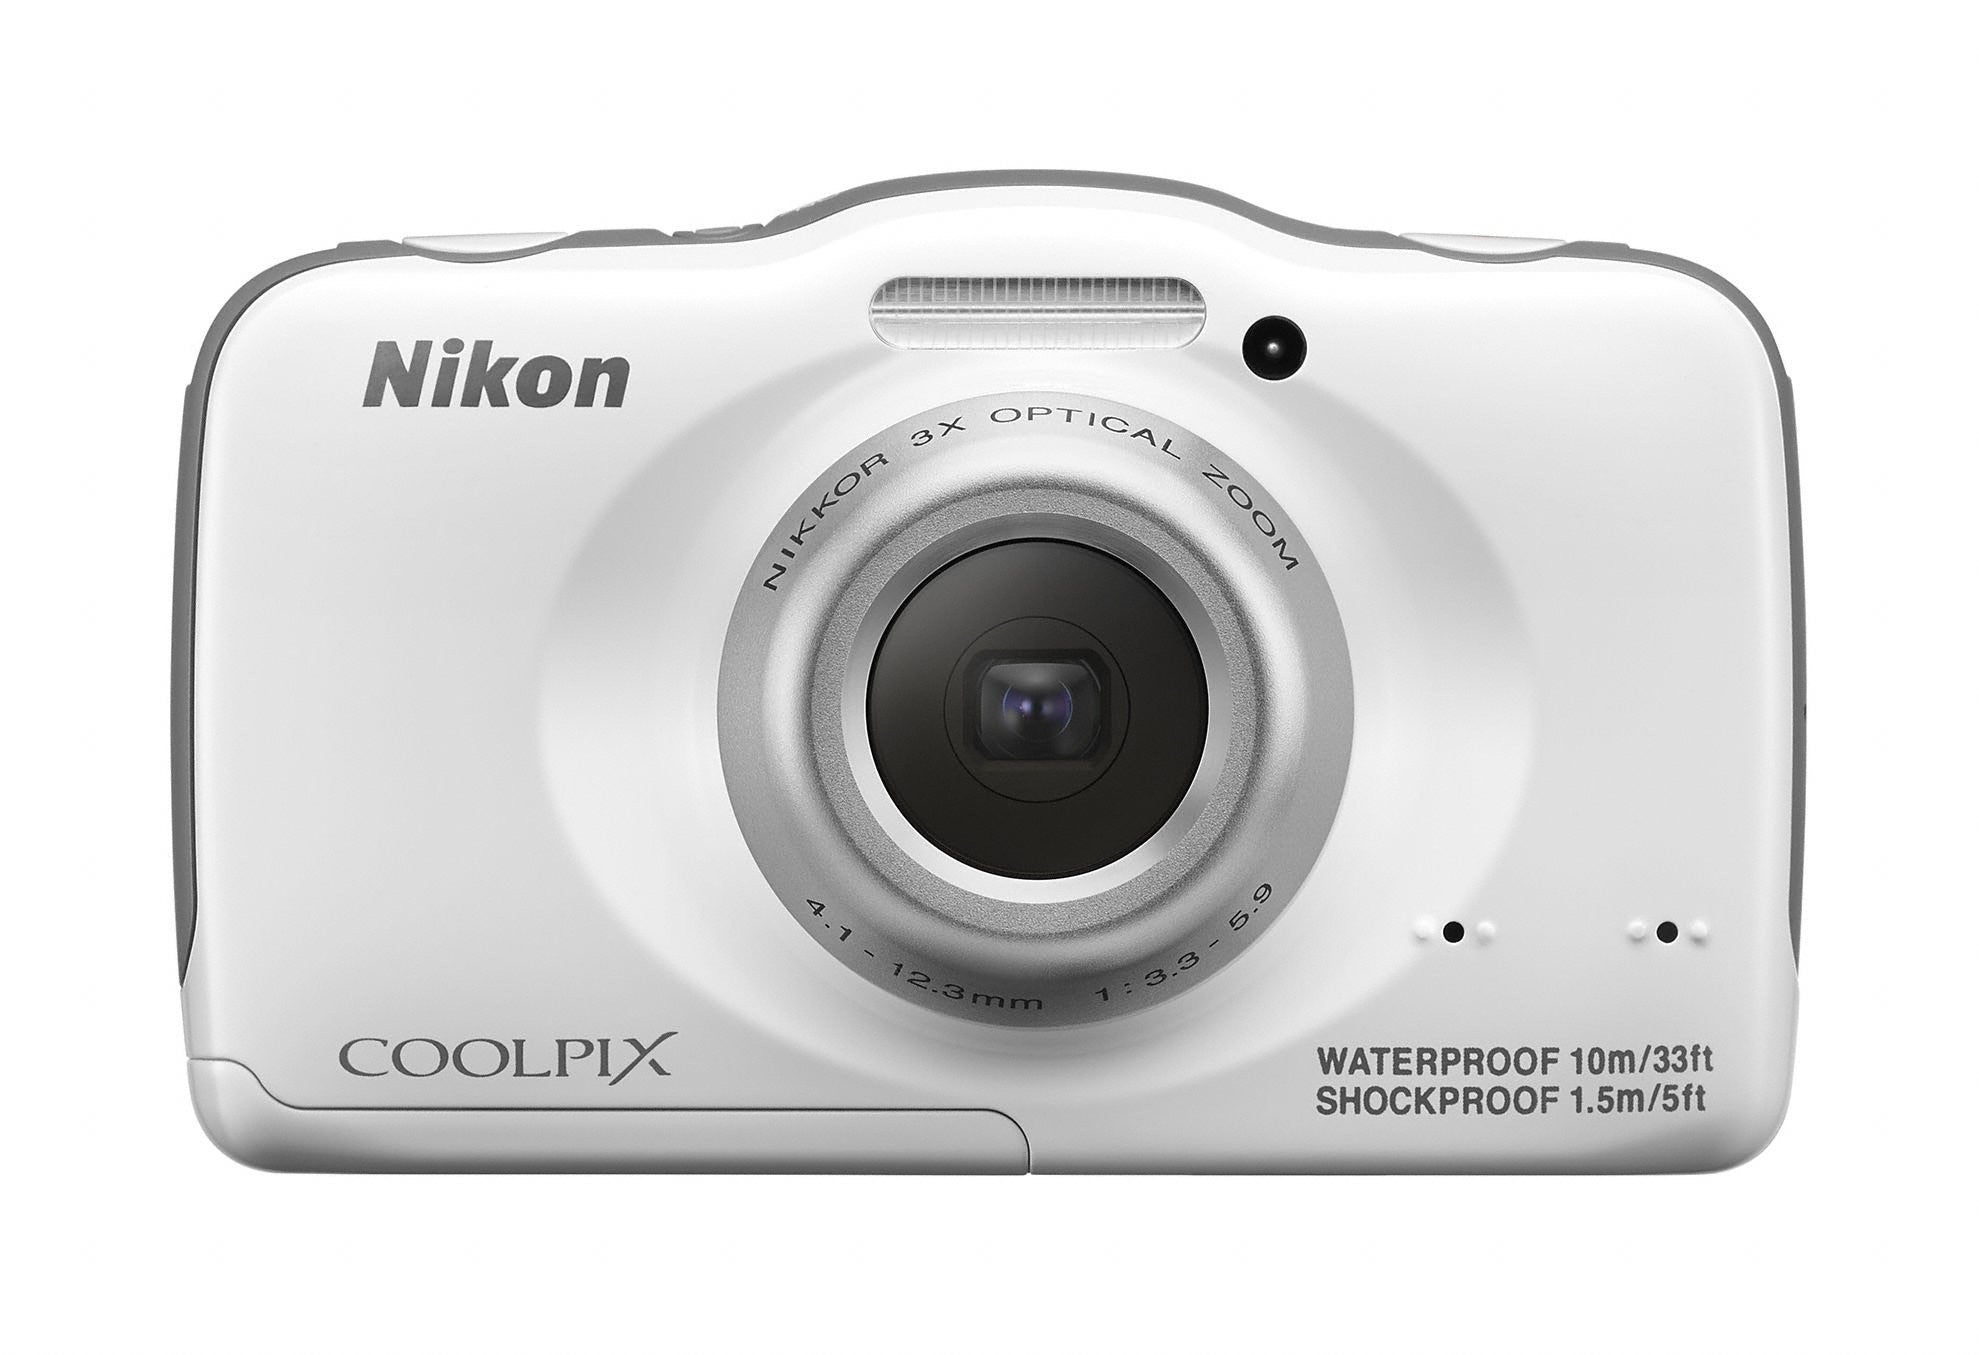 Nikon Coolpix S33 Digital Camera White, discontinued, Nikon - Pictureline  - 1